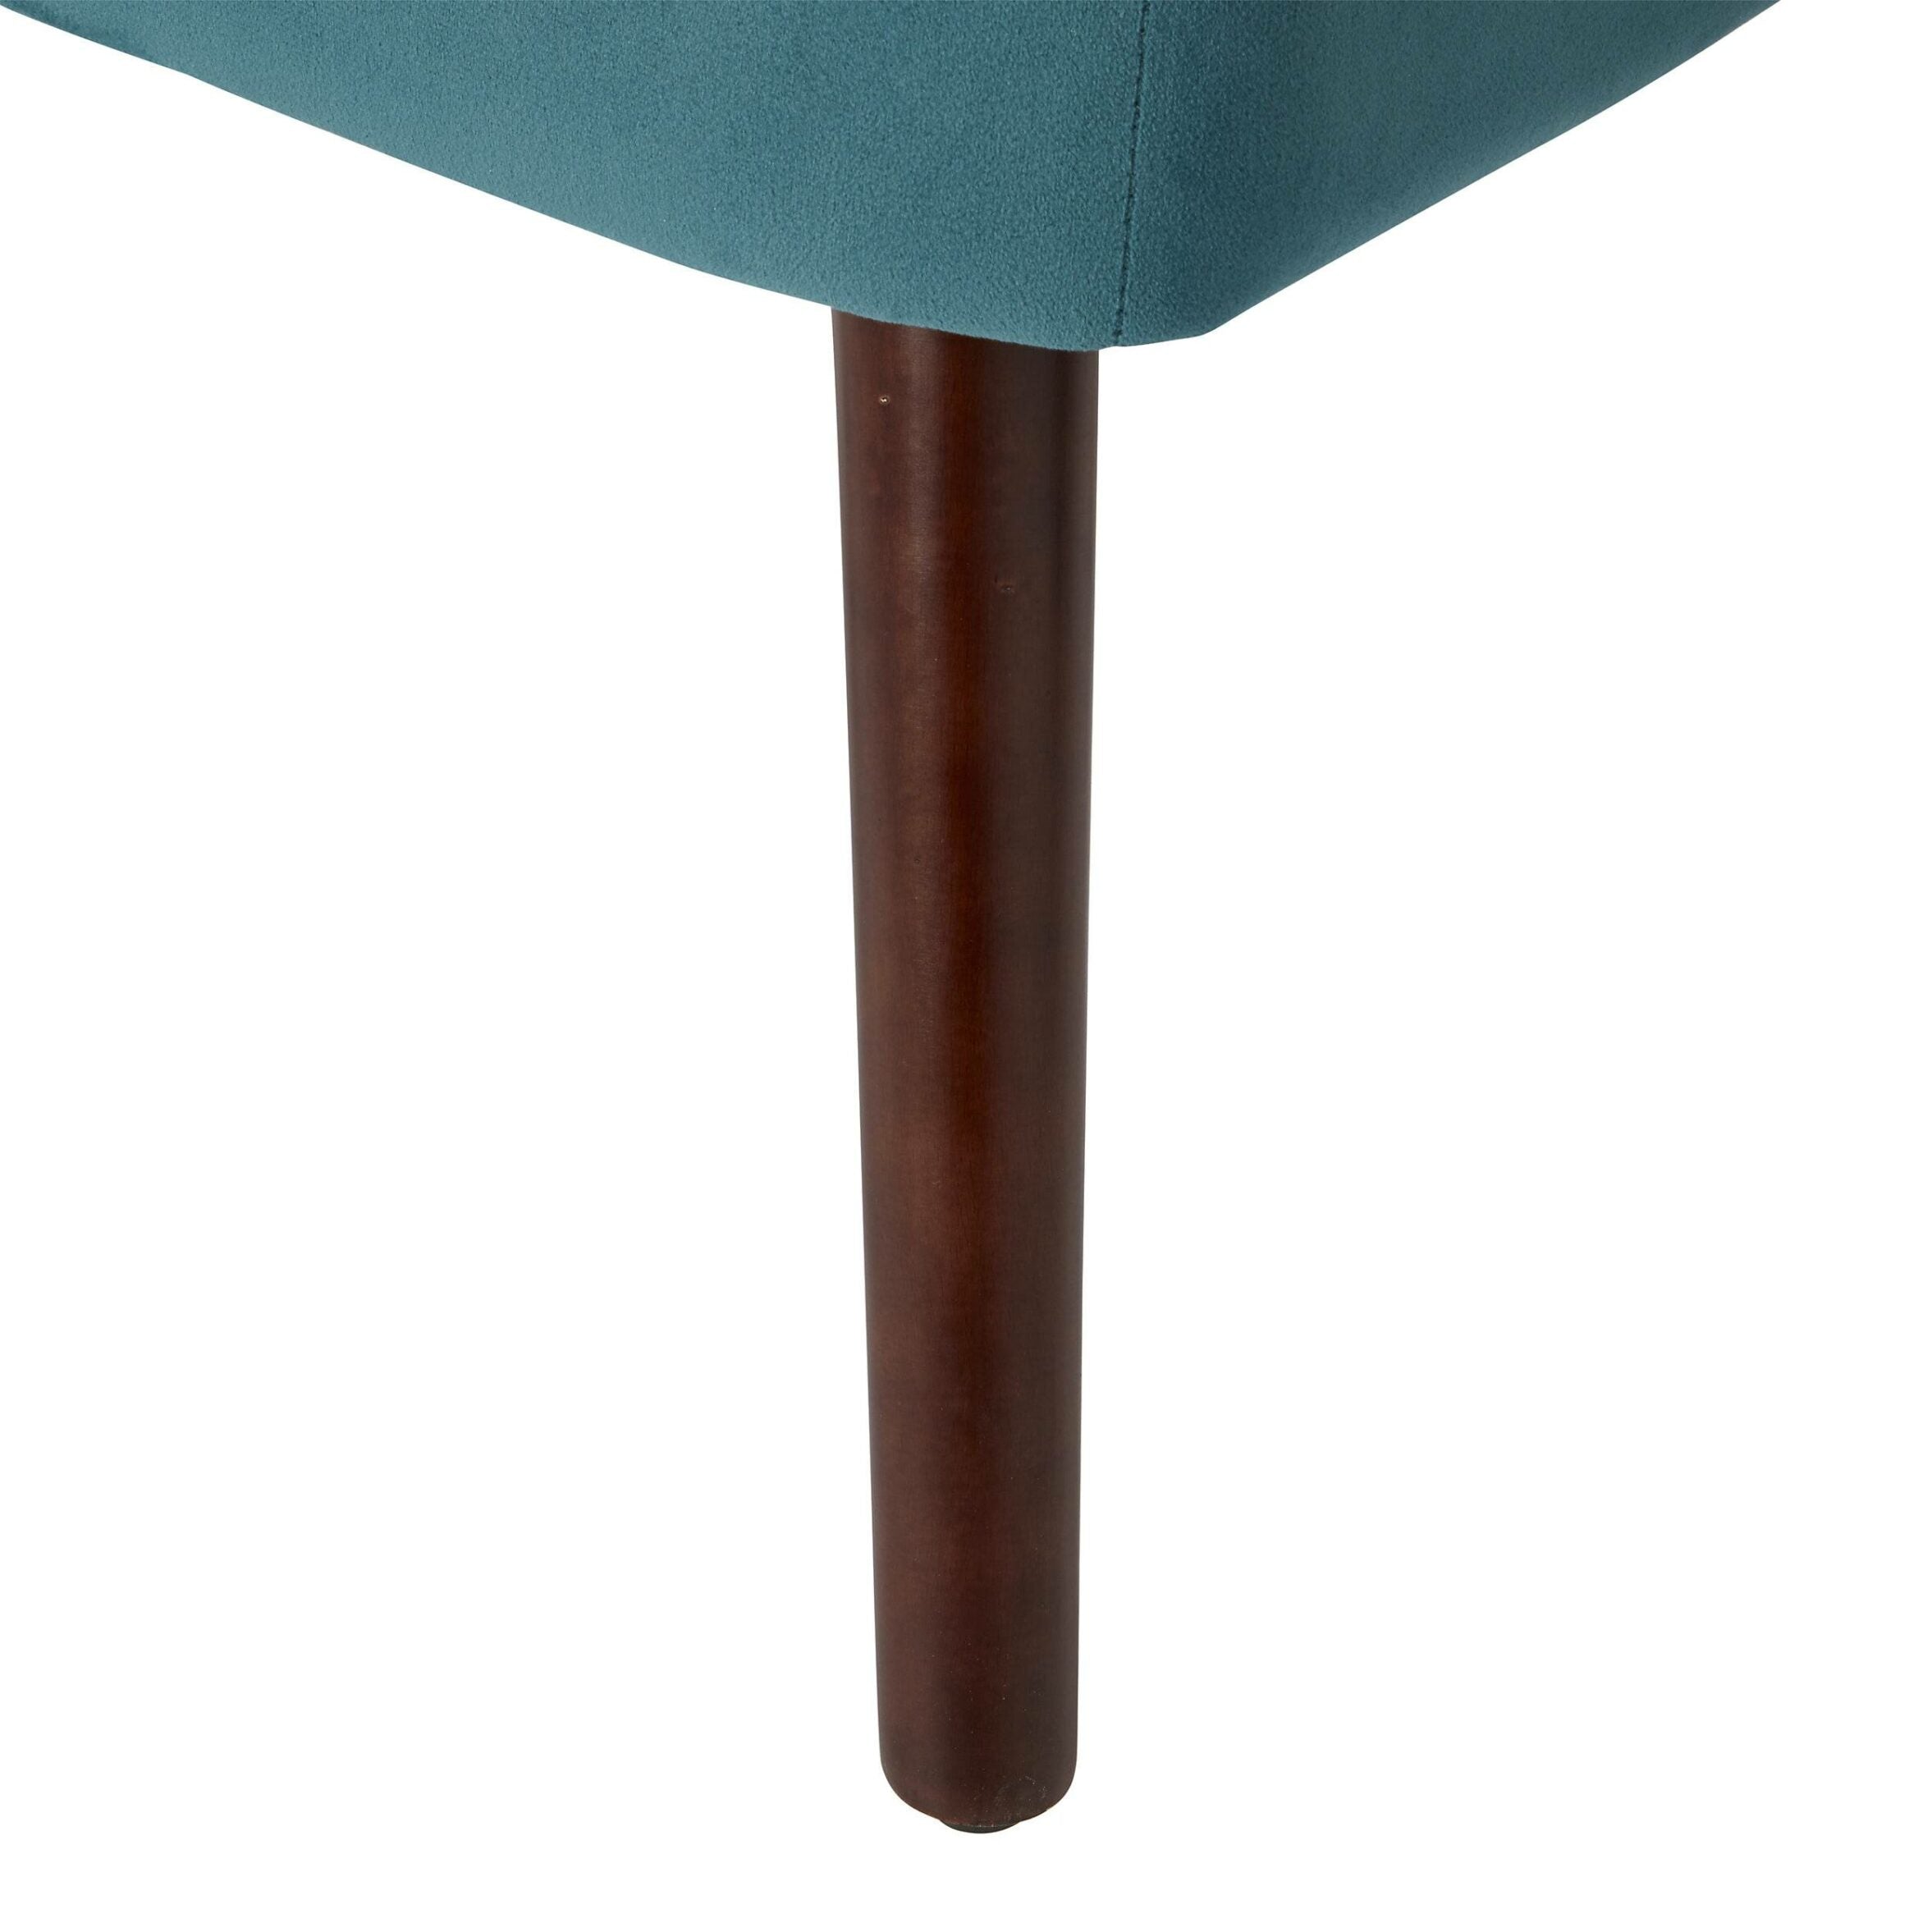 Zorita Teal Velvet effect Occasional chair (H)830mm (W)650mm (D)715mm -0891